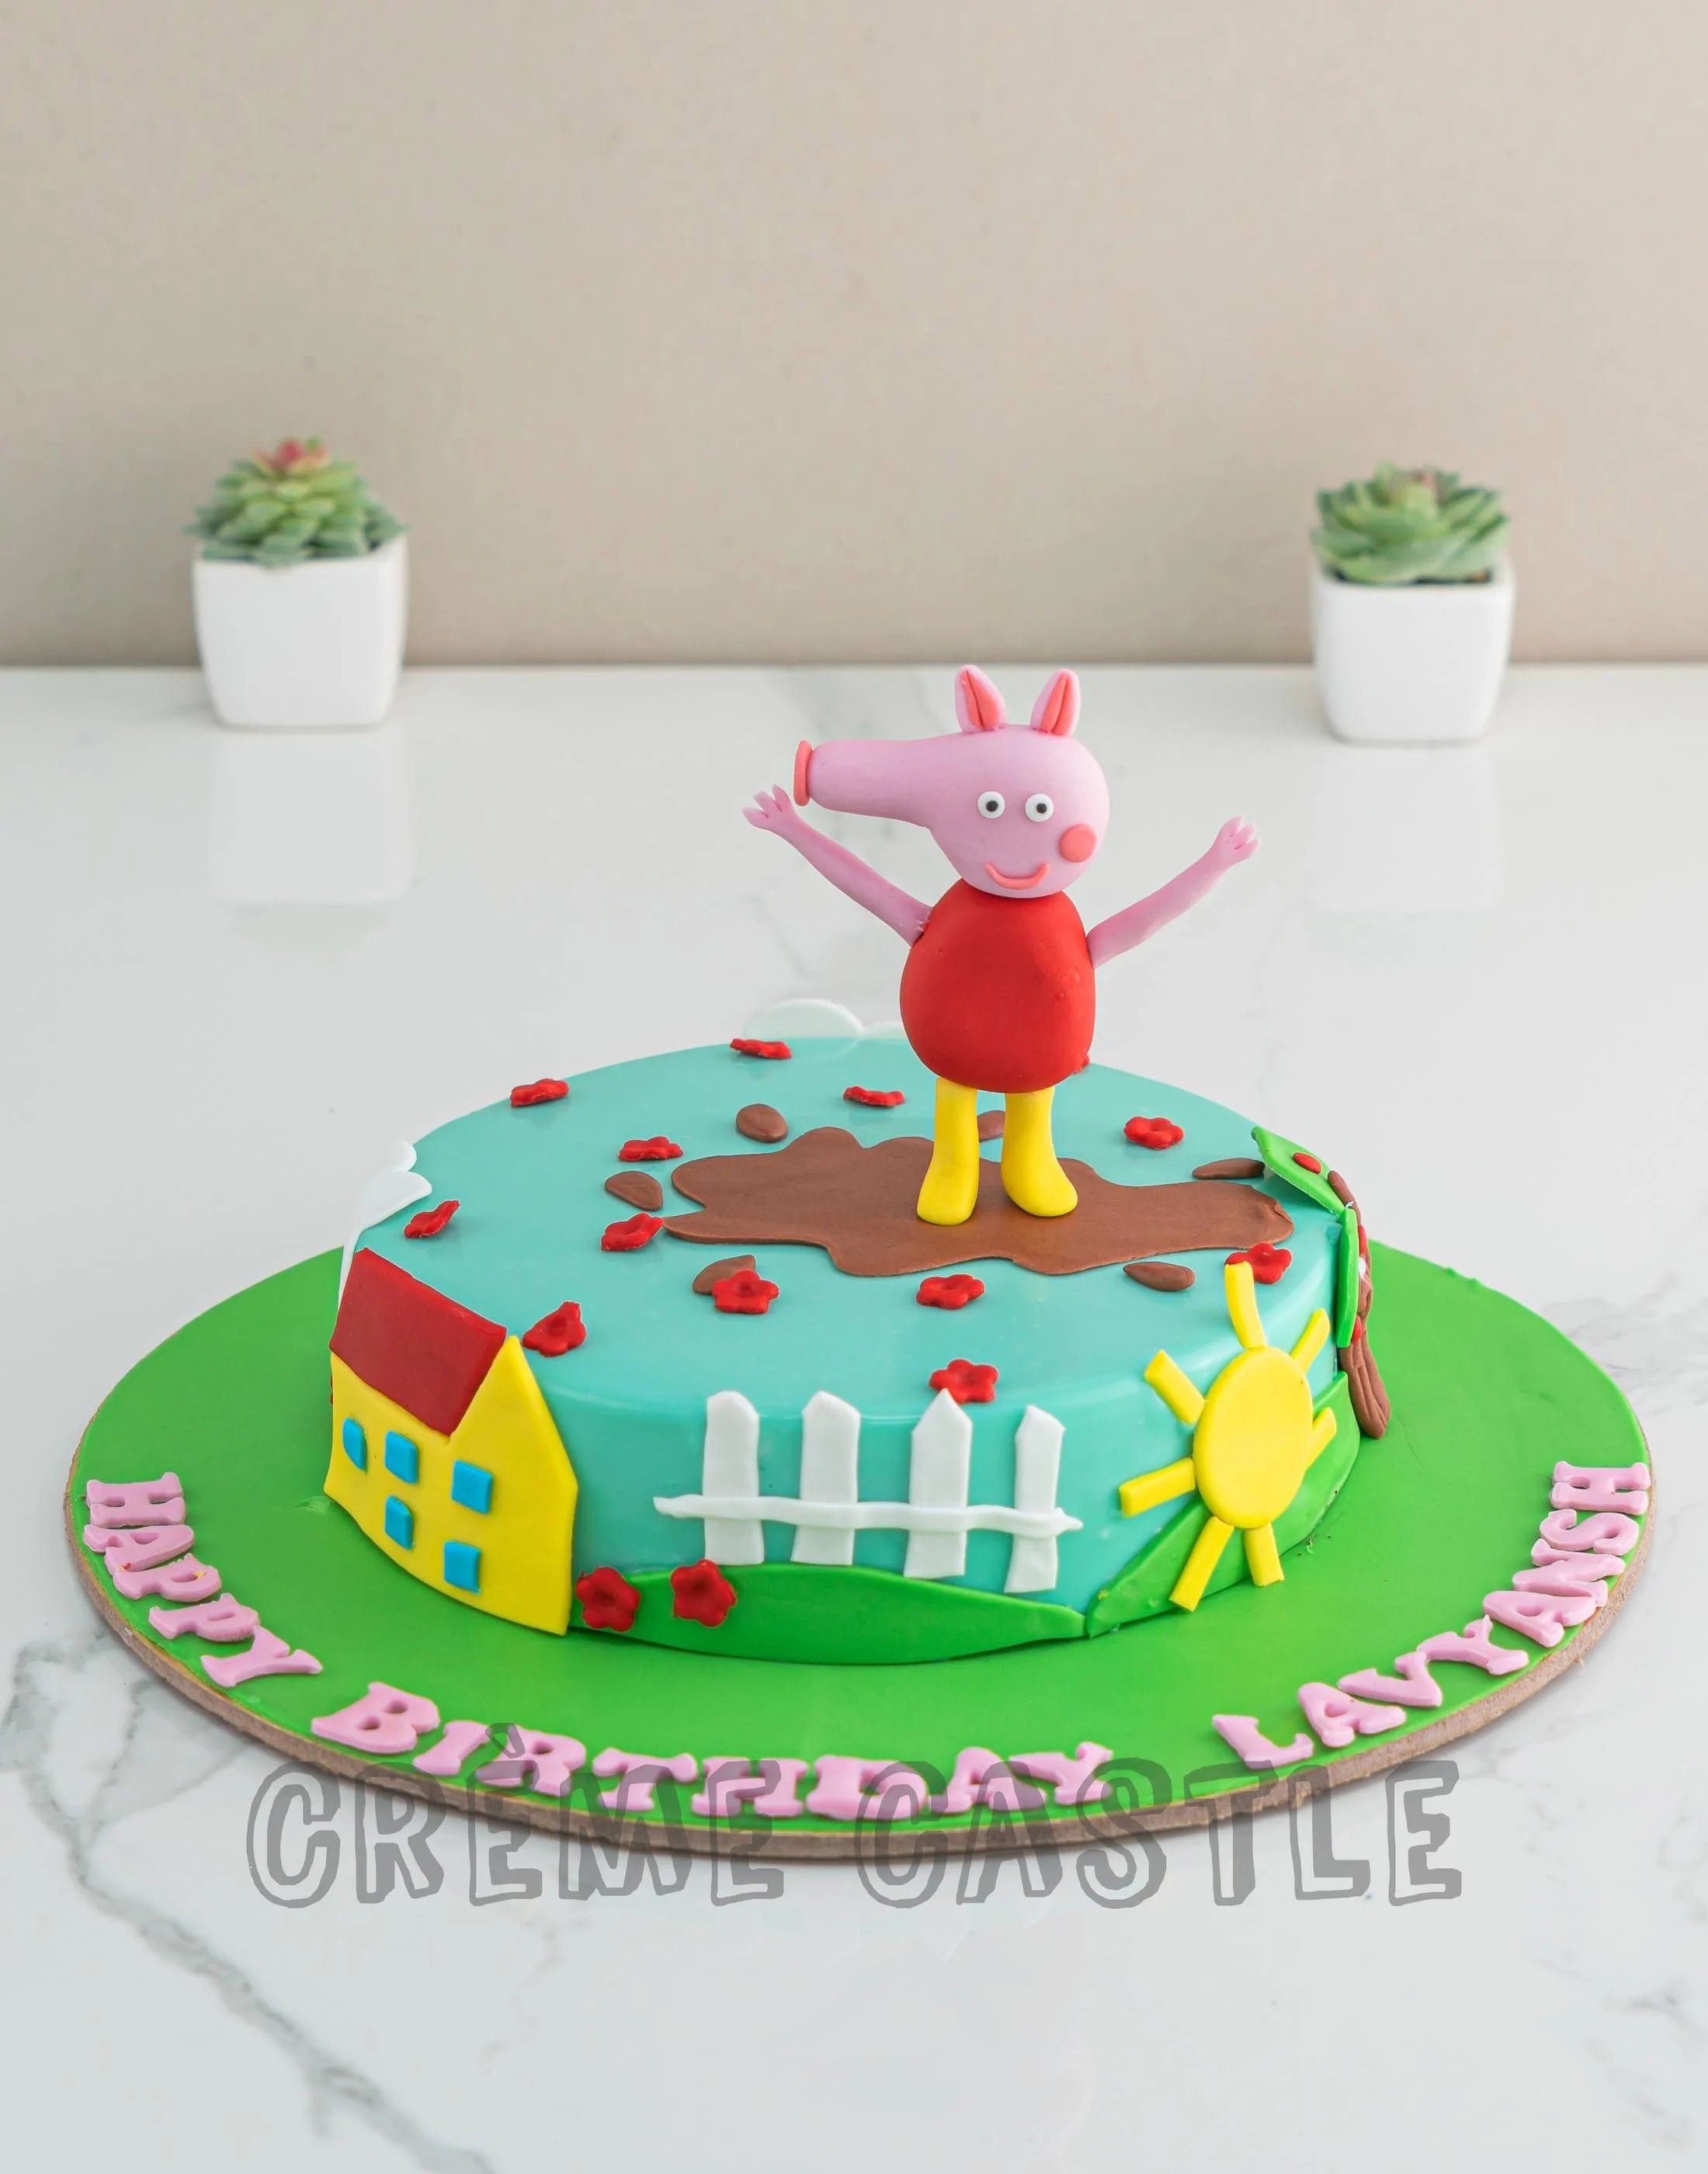 Scenery cake ... - Cake 'N' Creations | Facebook